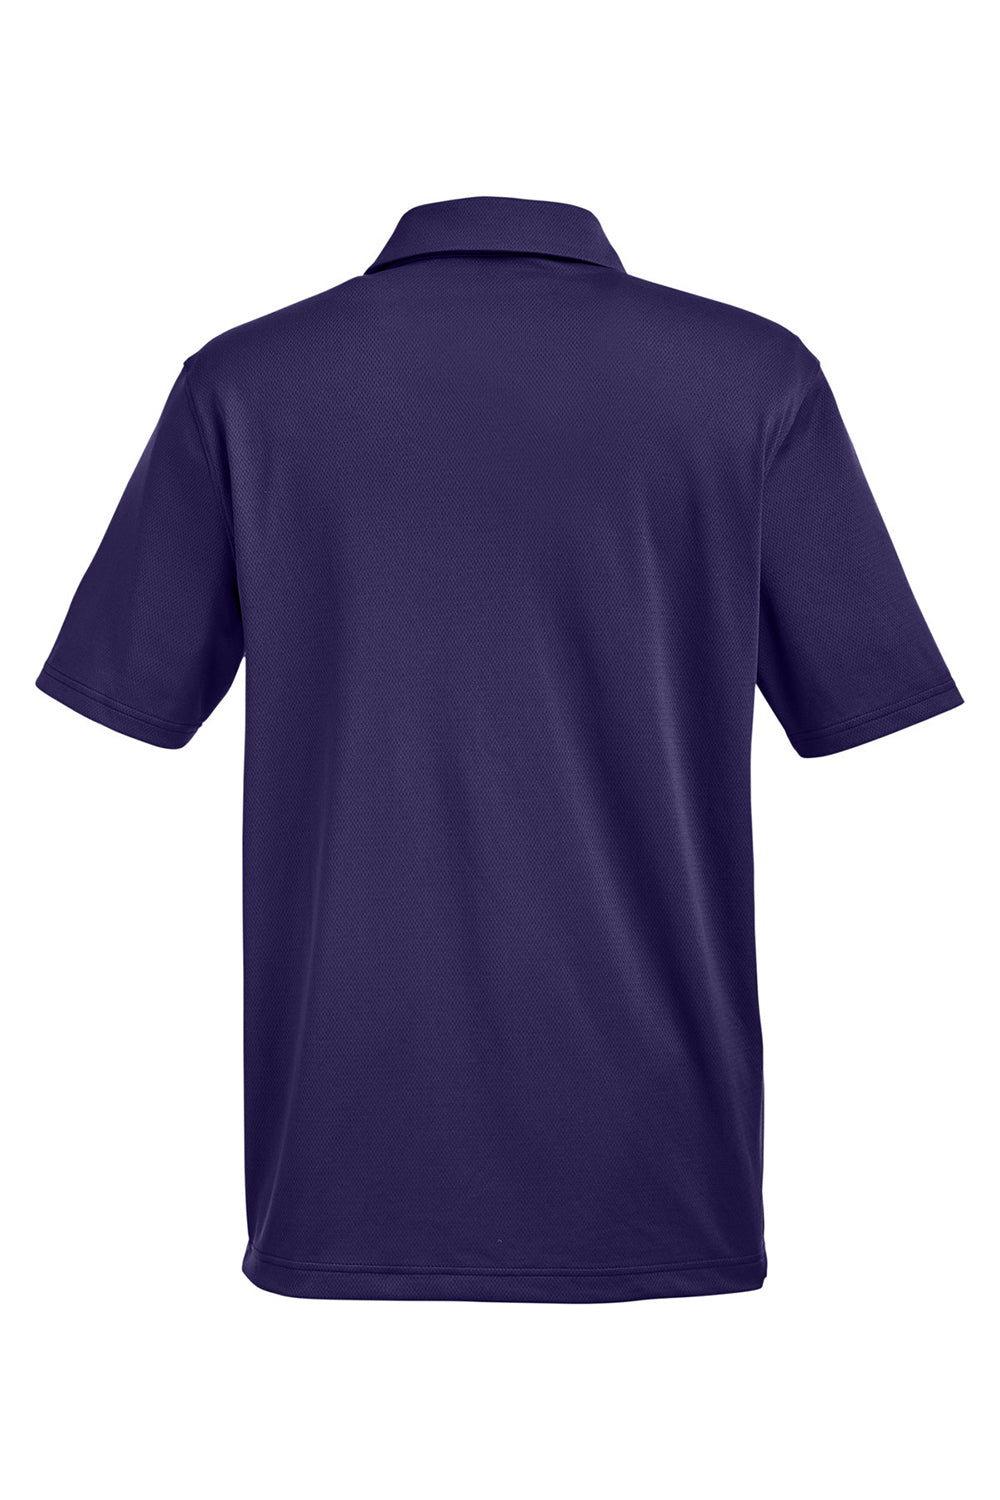 Under Armour 1370399 Mens Tech Moisture Wicking Short Sleeve Polo Shirt Purple Flat Back